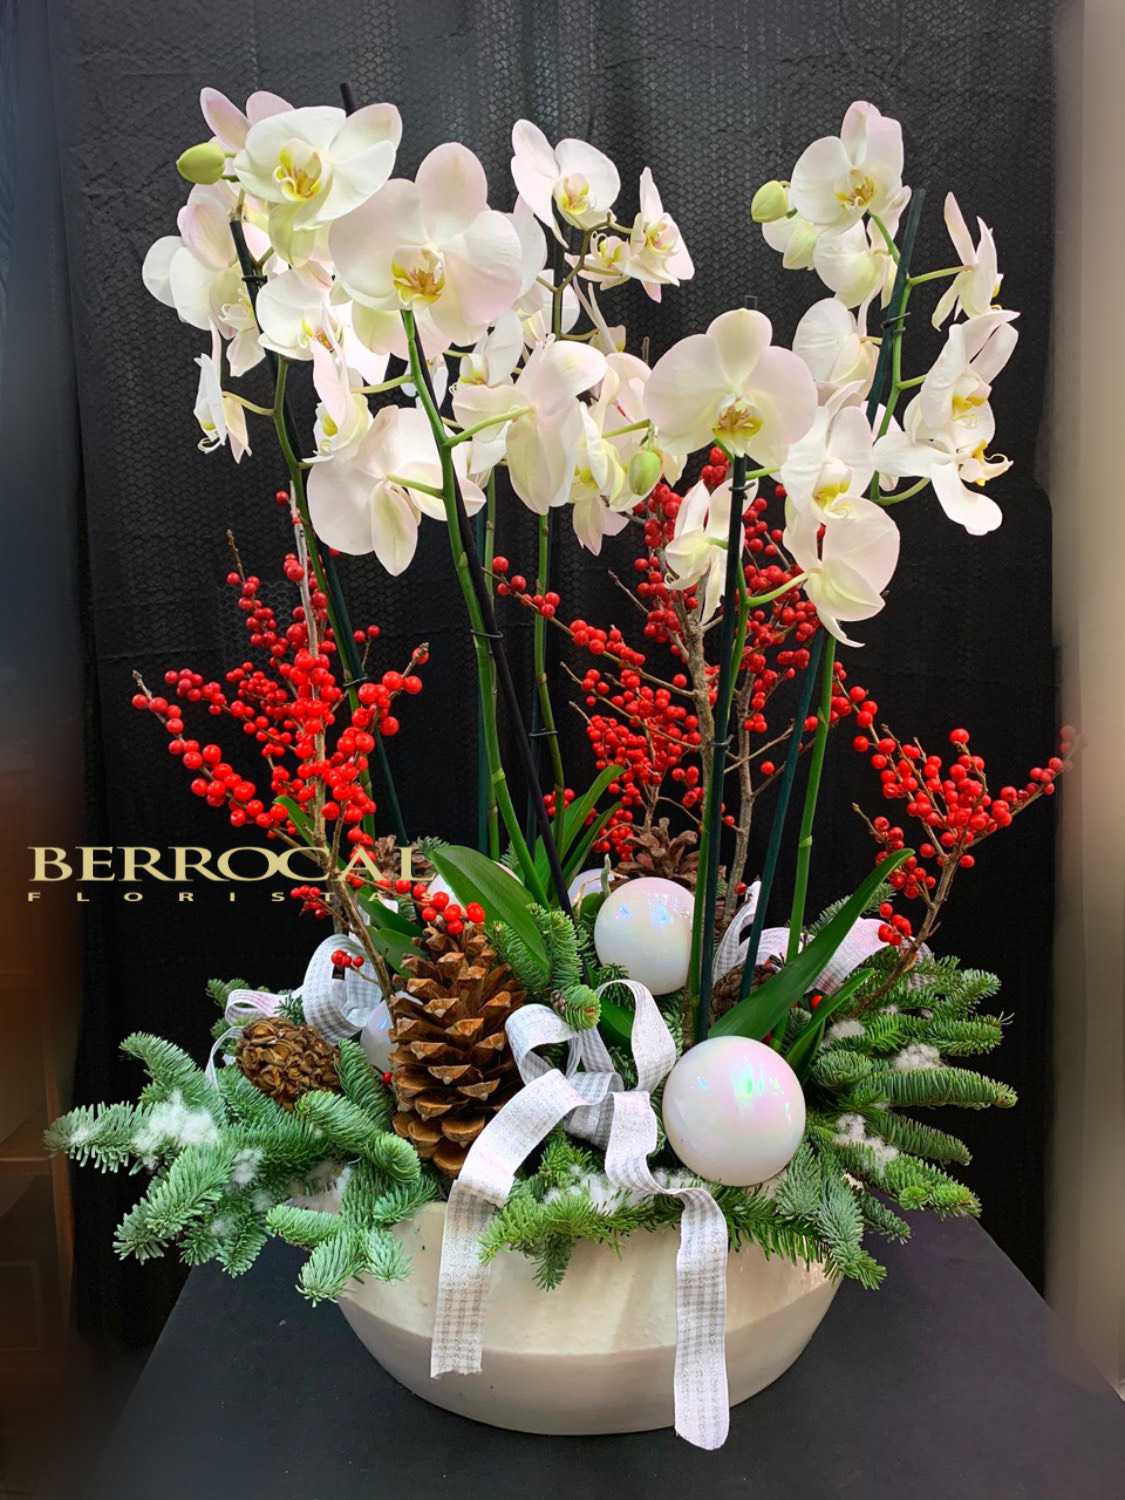 Christmas arrangement with orchids - Floristería en Marbella Berrocal  flores a domicilio.